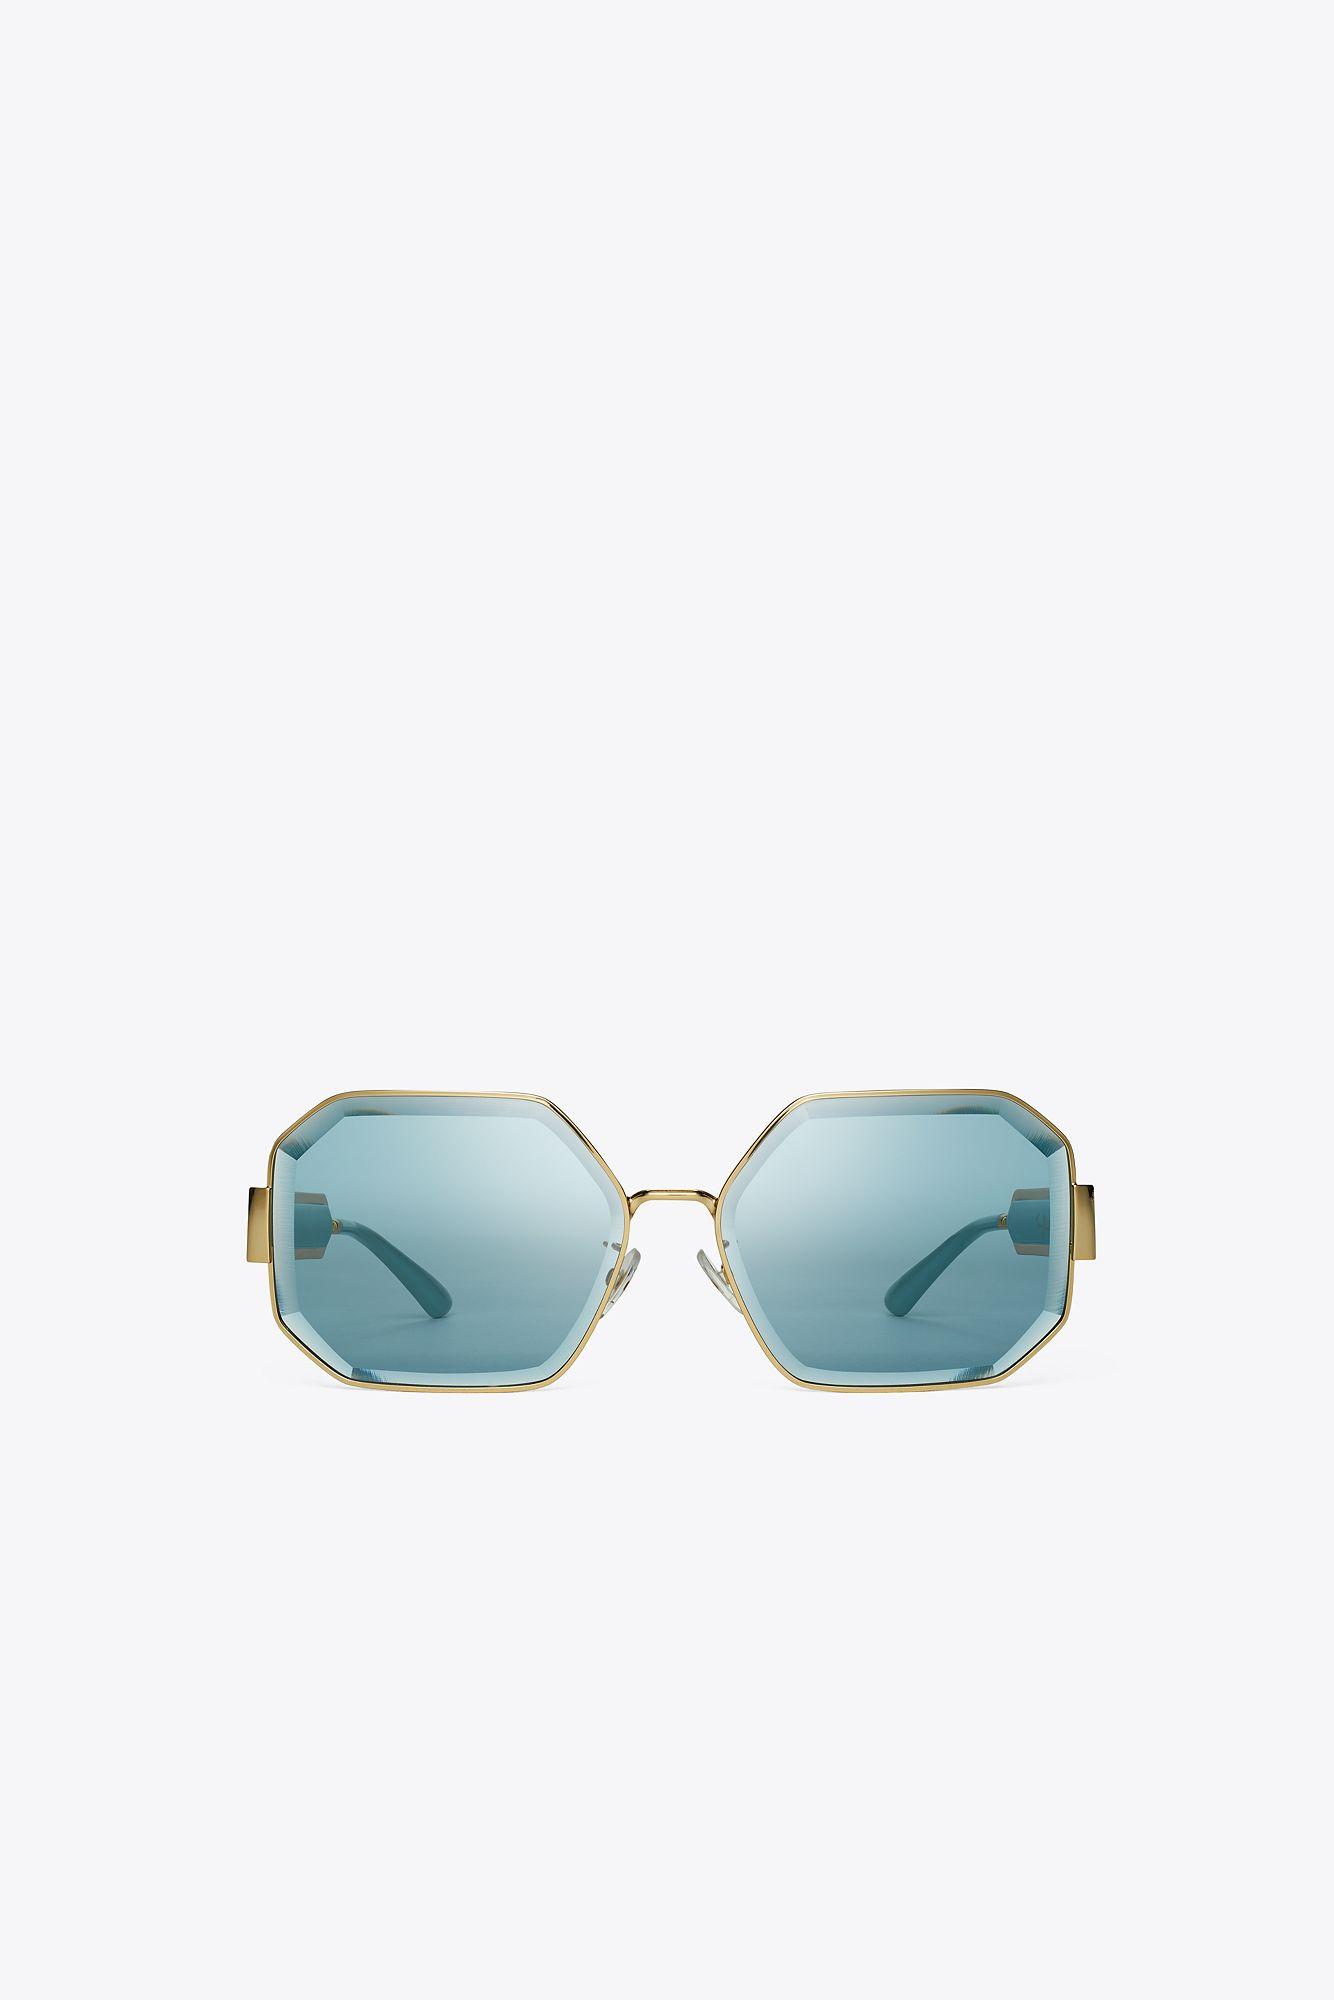 Tory Burch Kira Faceted Geometric Sunglasses in Blue | Lyst